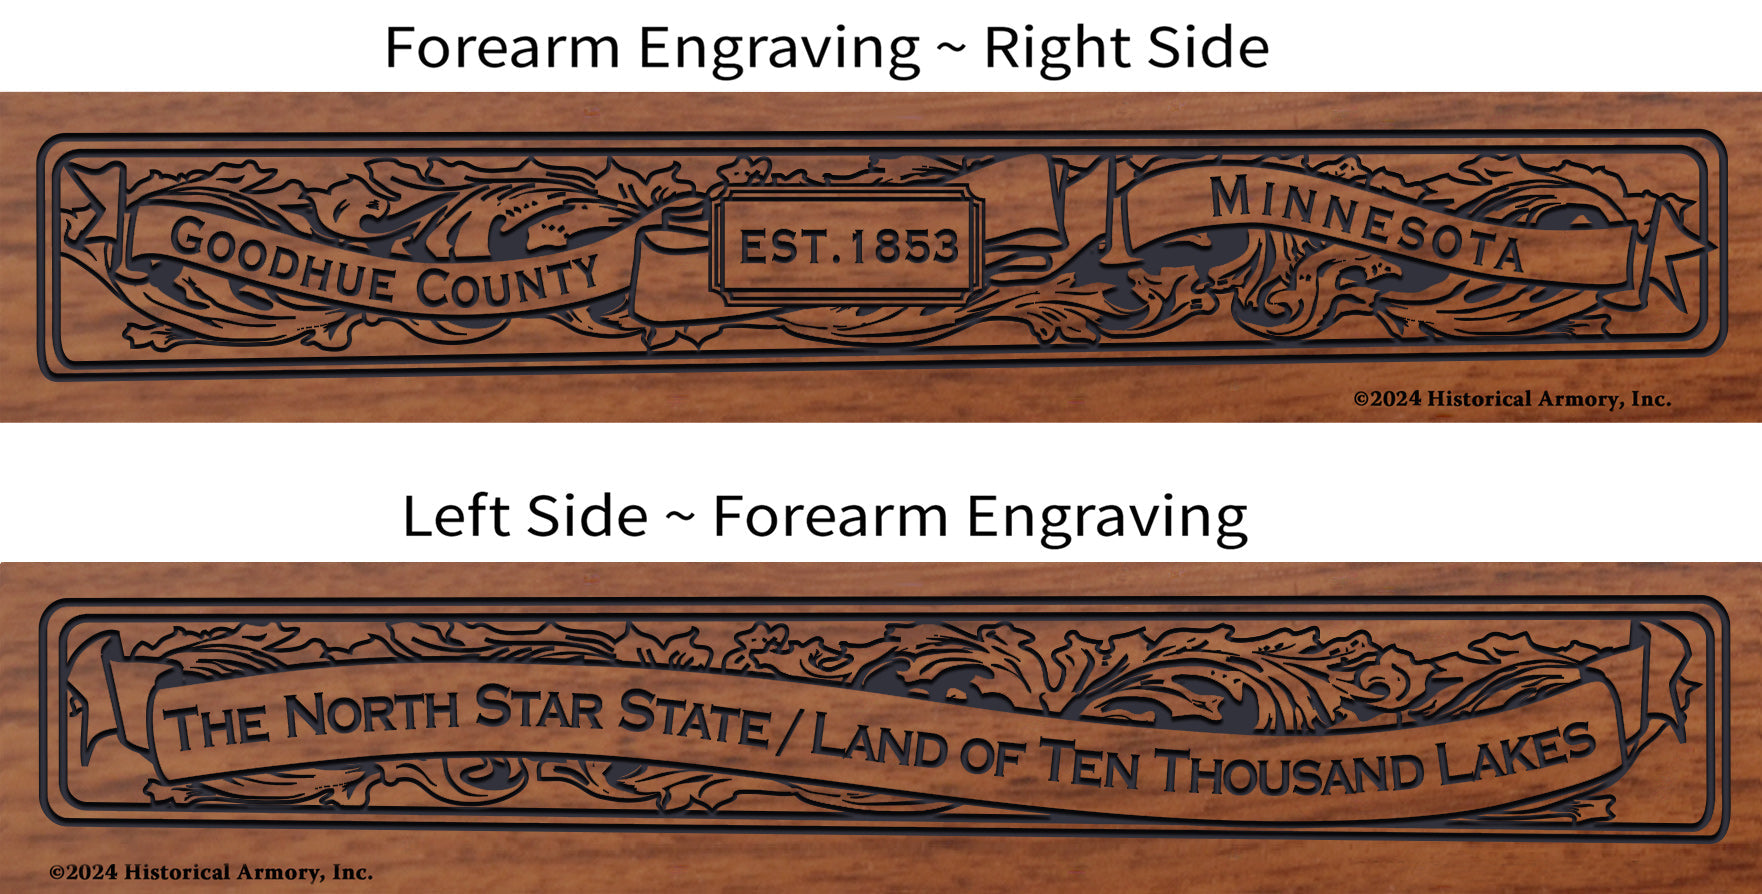 Goodhue County Minnesota Engraved Rifle Forearm